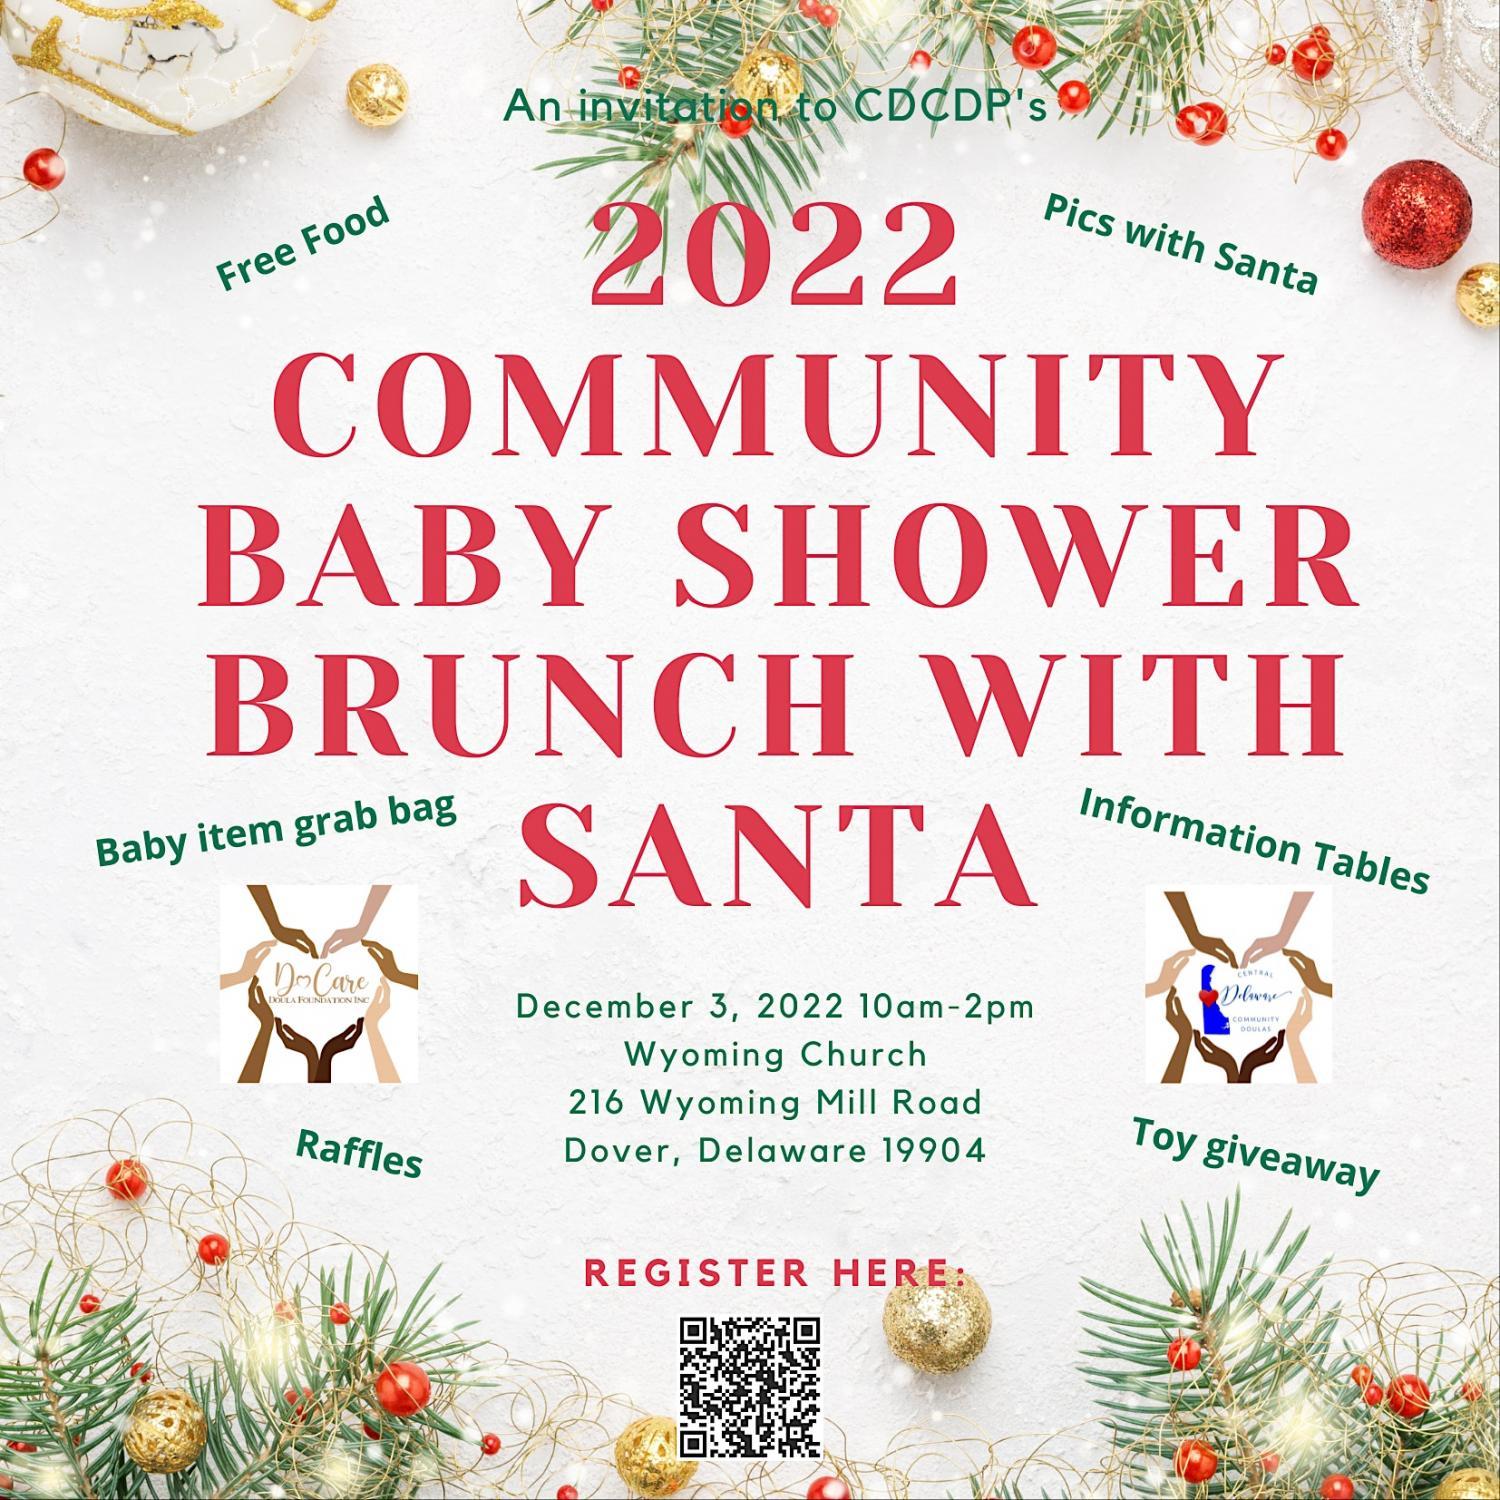 Brunch with Santa Community Baby Shower
Sat Dec 3, 10:00 AM - Sat Dec 3, 7:00 PM
in 29 days